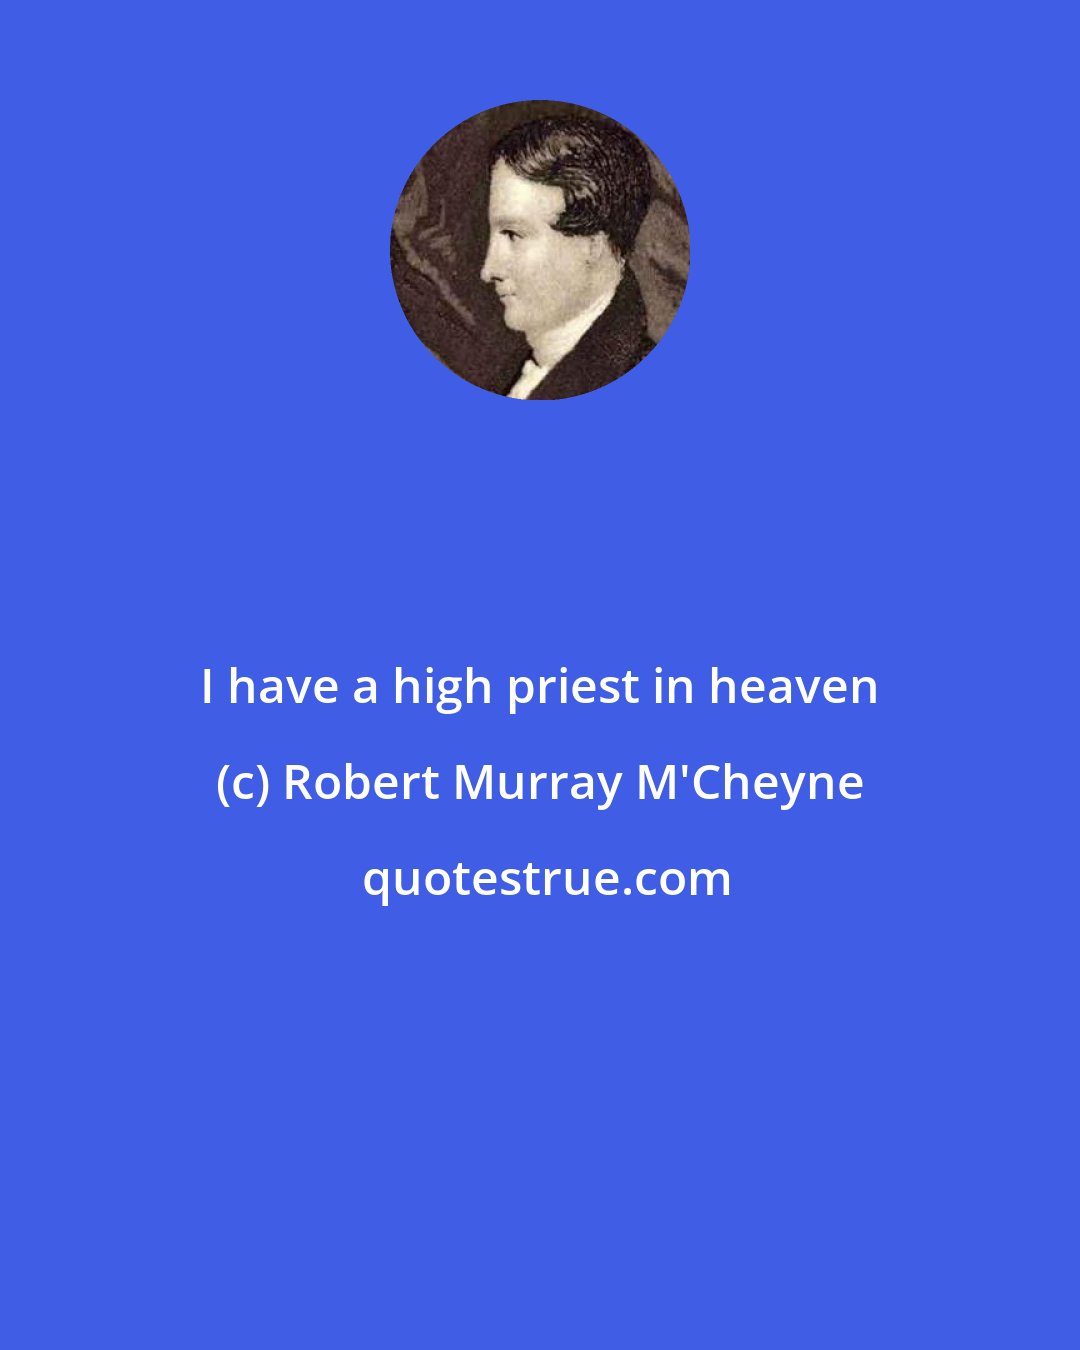 Robert Murray M'Cheyne: I have a high priest in heaven